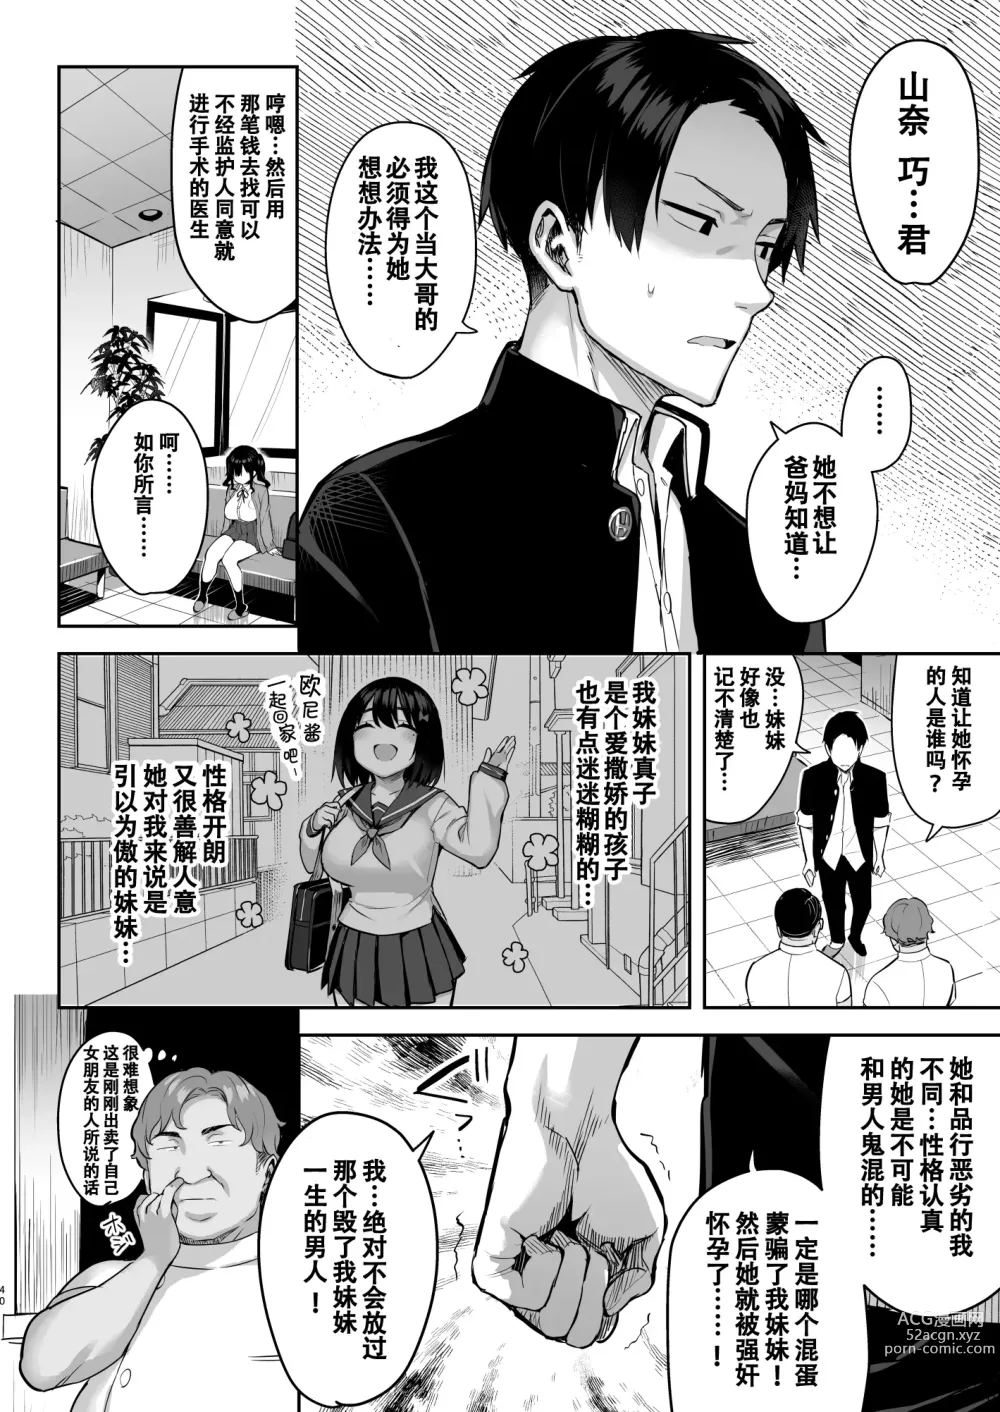 Page 41 of doujinshi 悪徳医淫 2